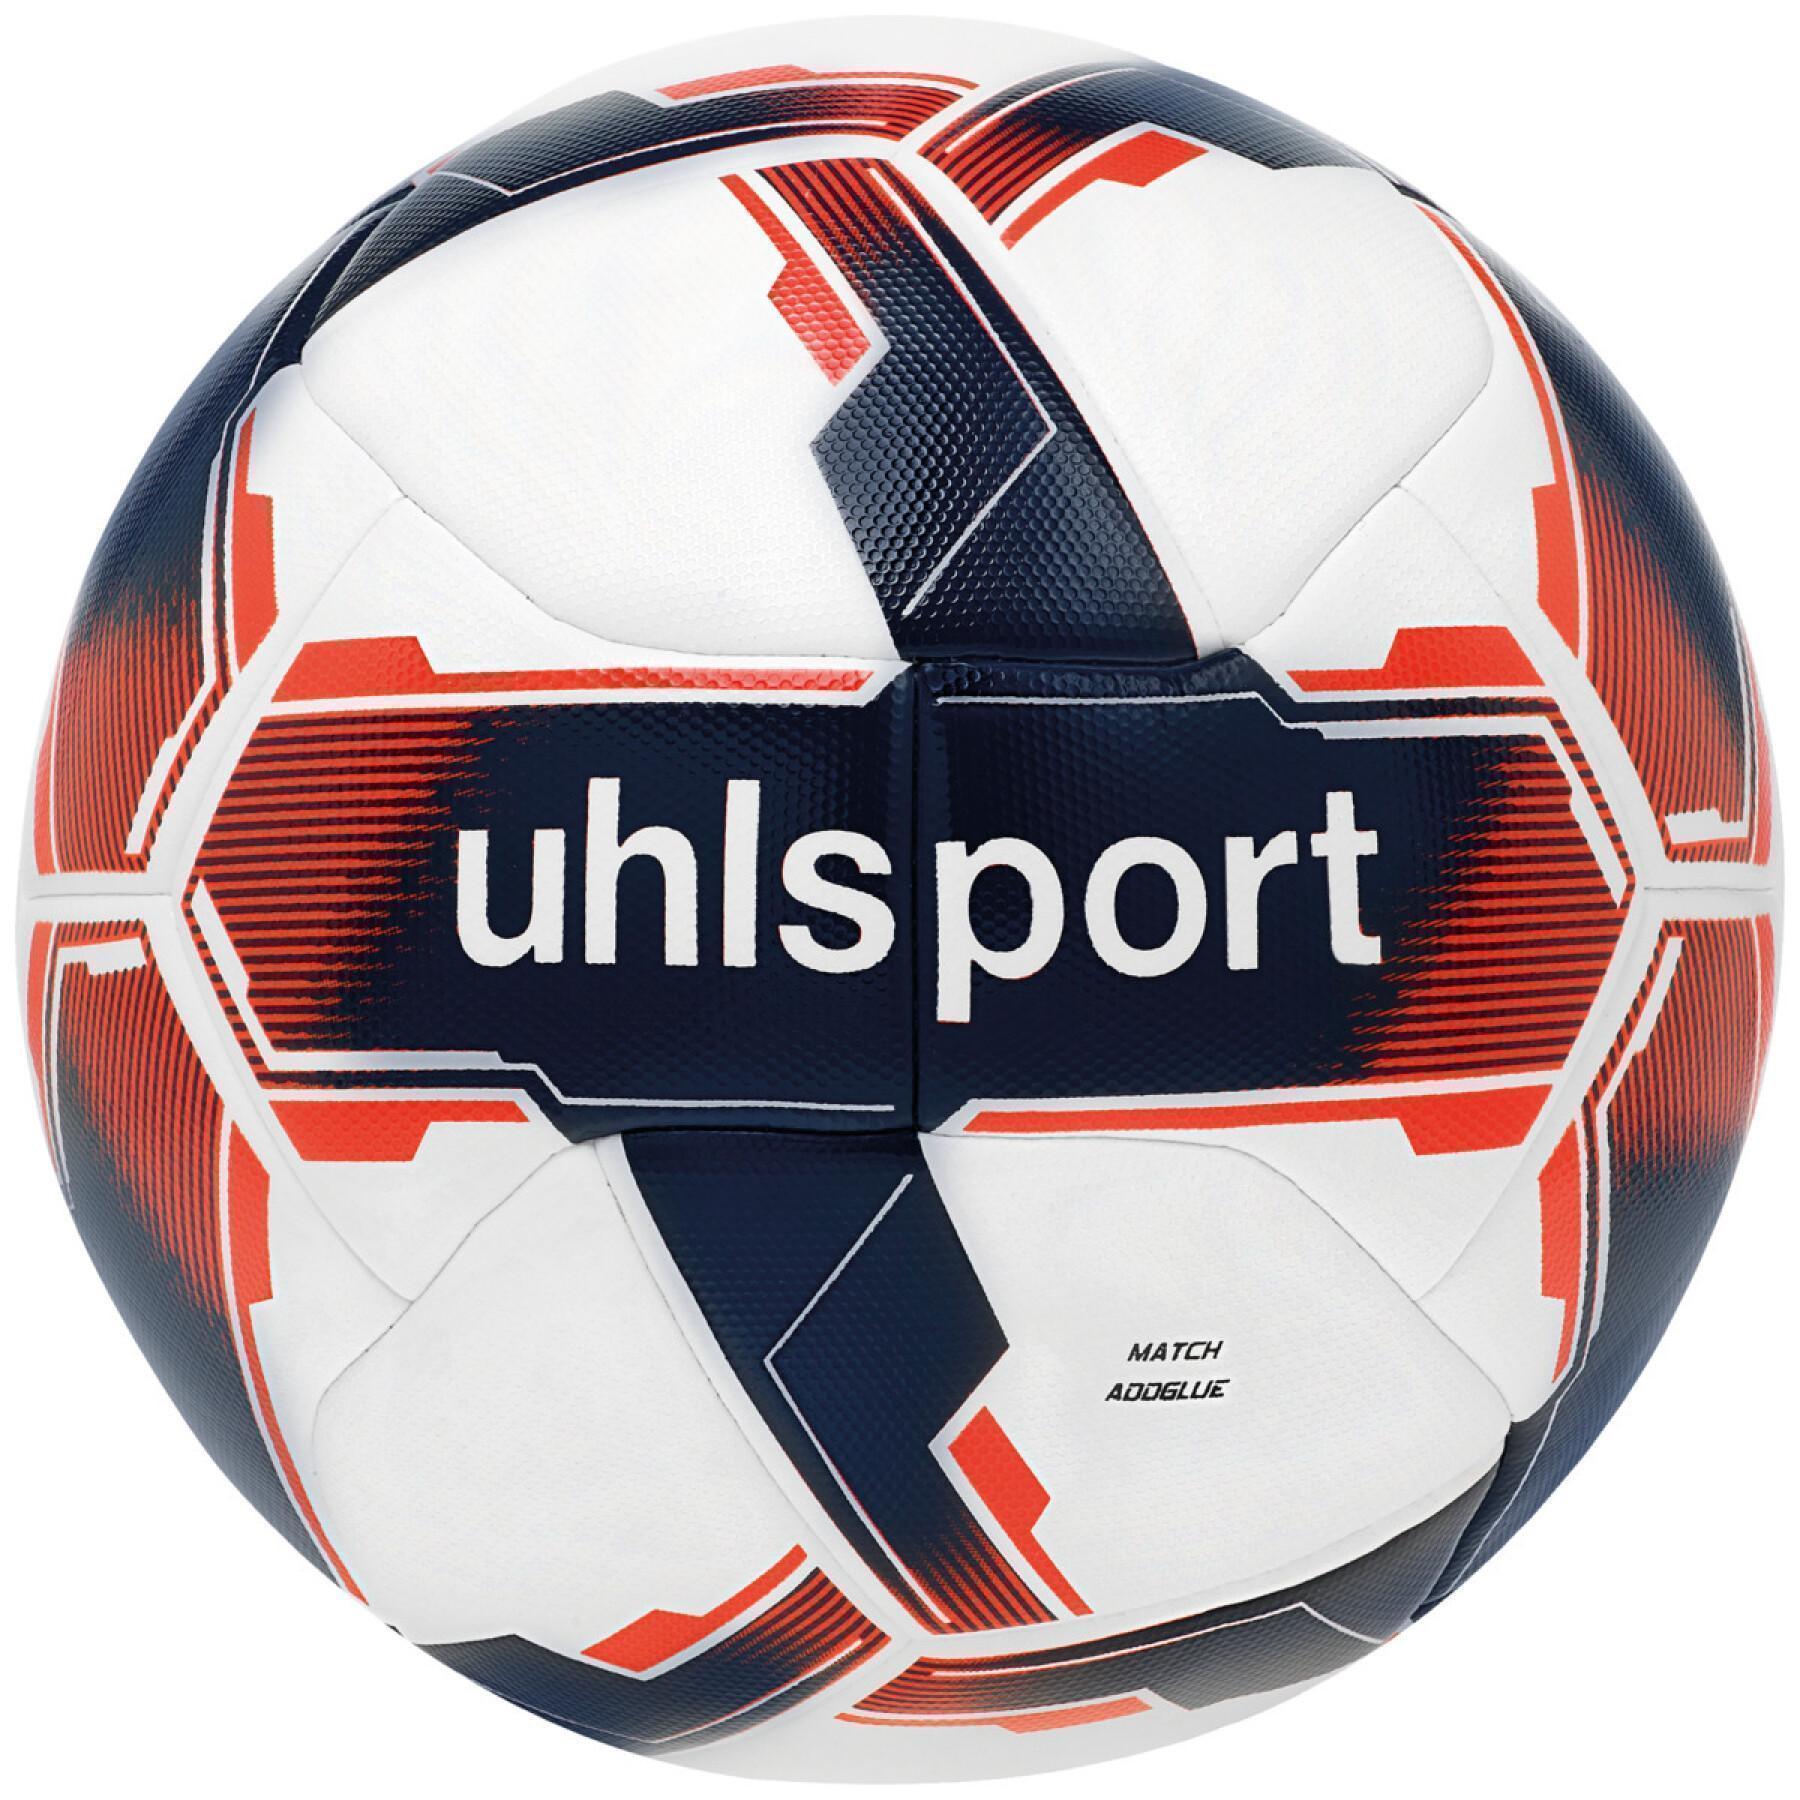 Piłka nożna Uhlsport Match Addglue